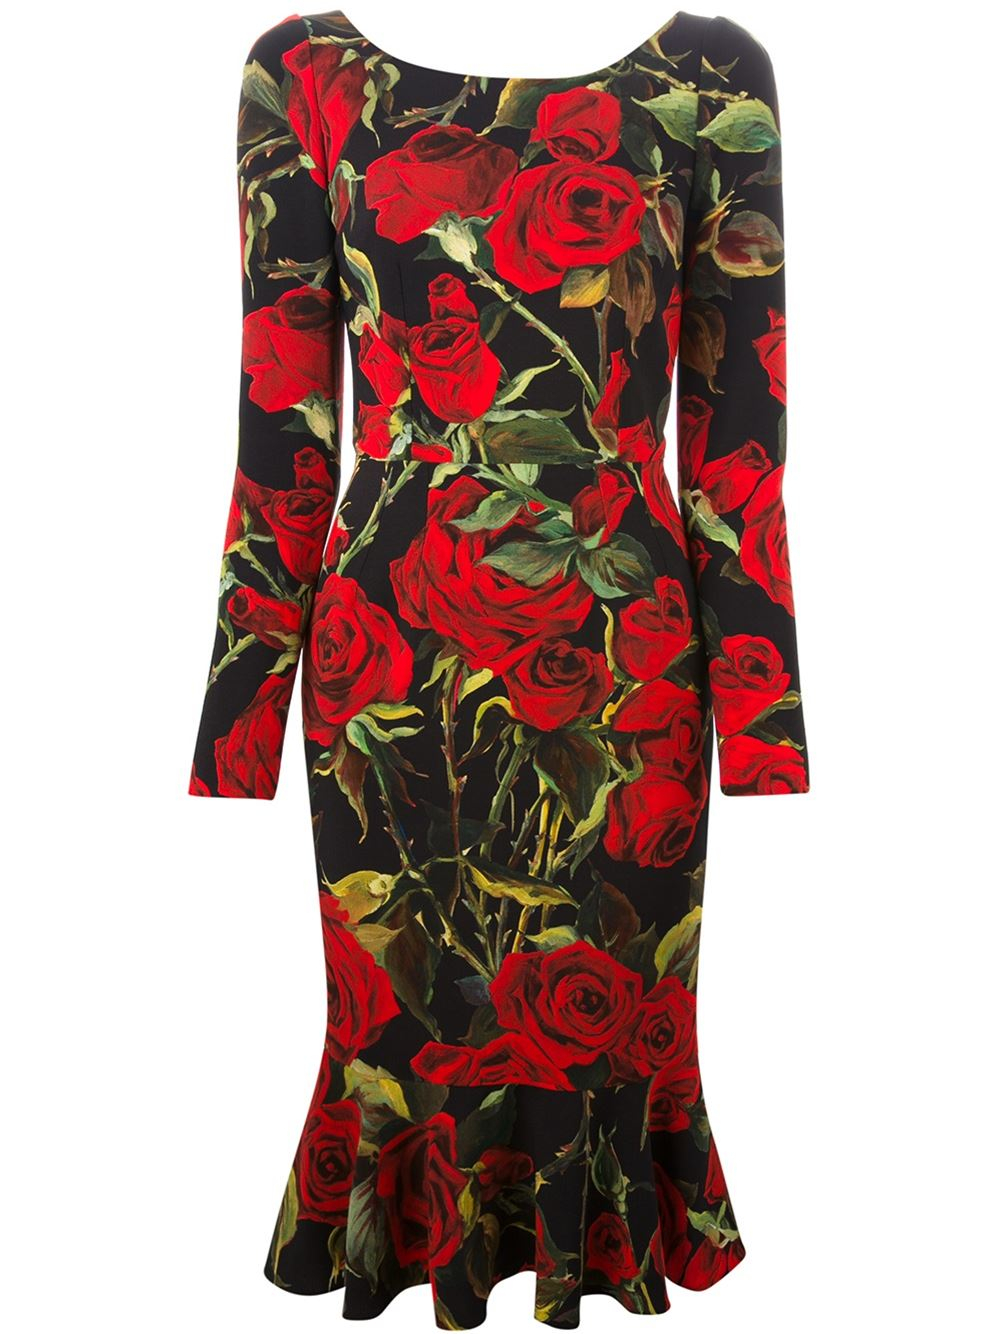 Lyst - Dolce & Gabbana Rose-Print Dress in Black